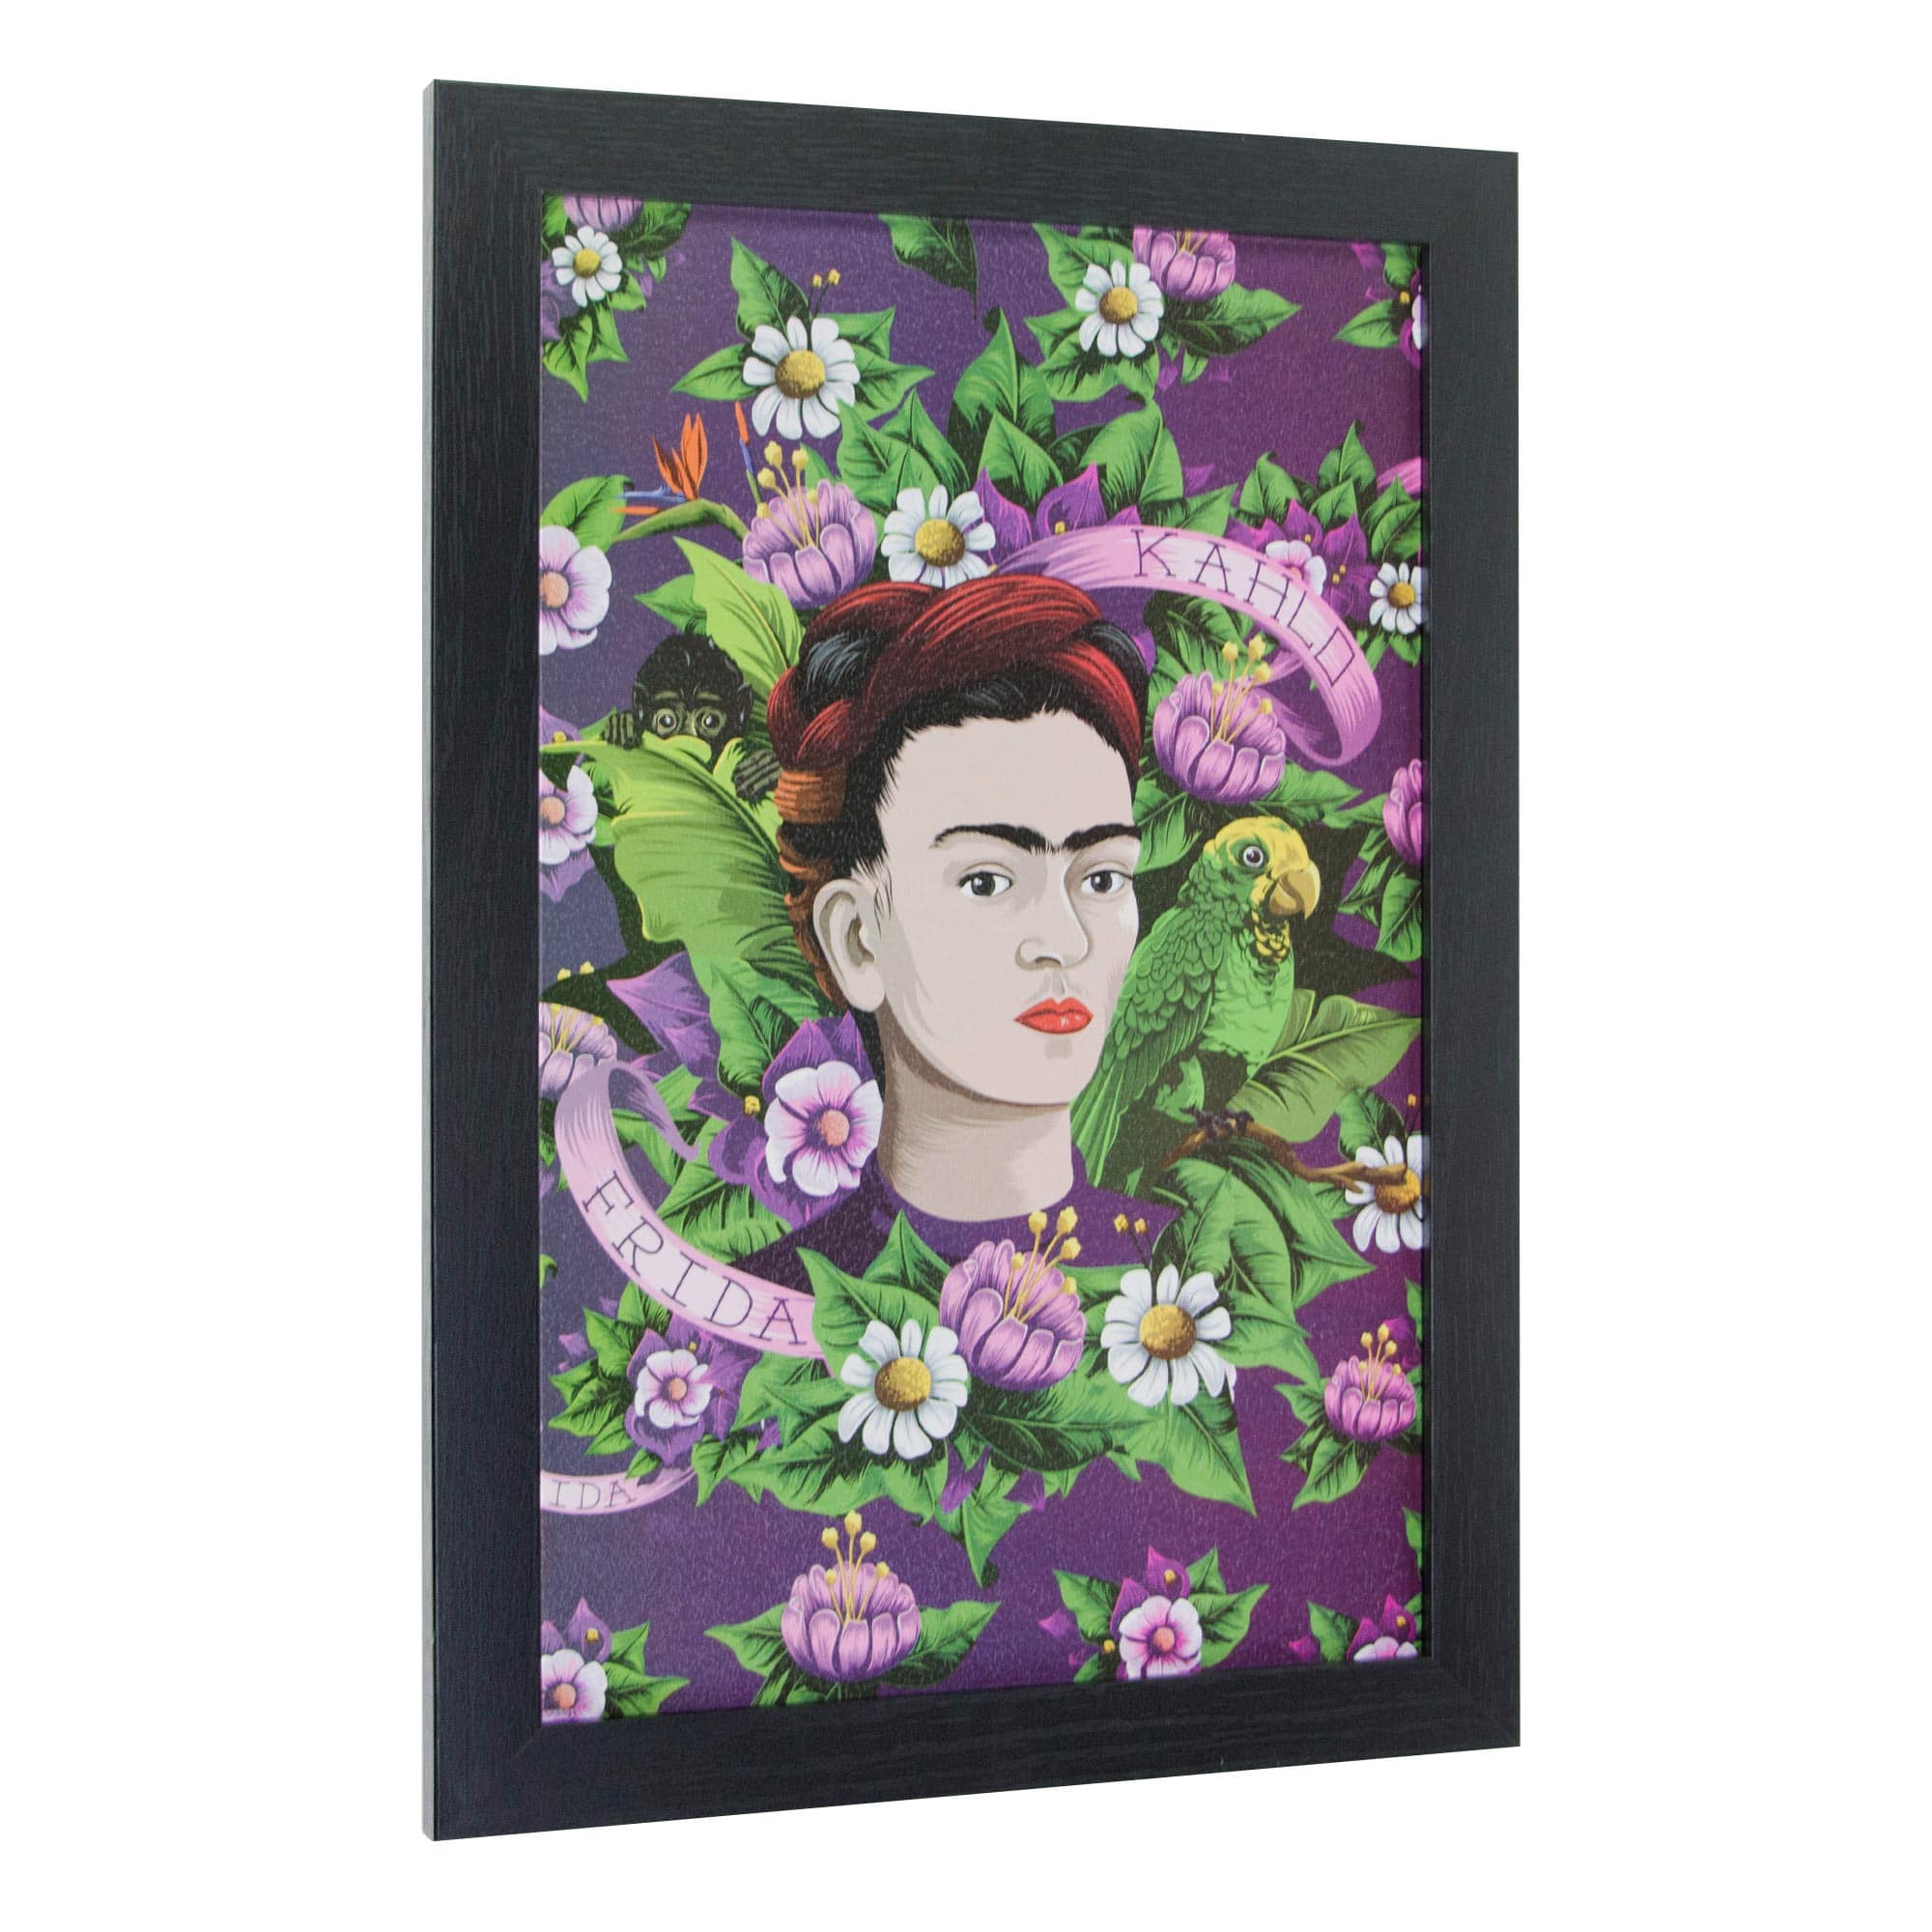 Frida Kahlo Artist Framed Wall Art